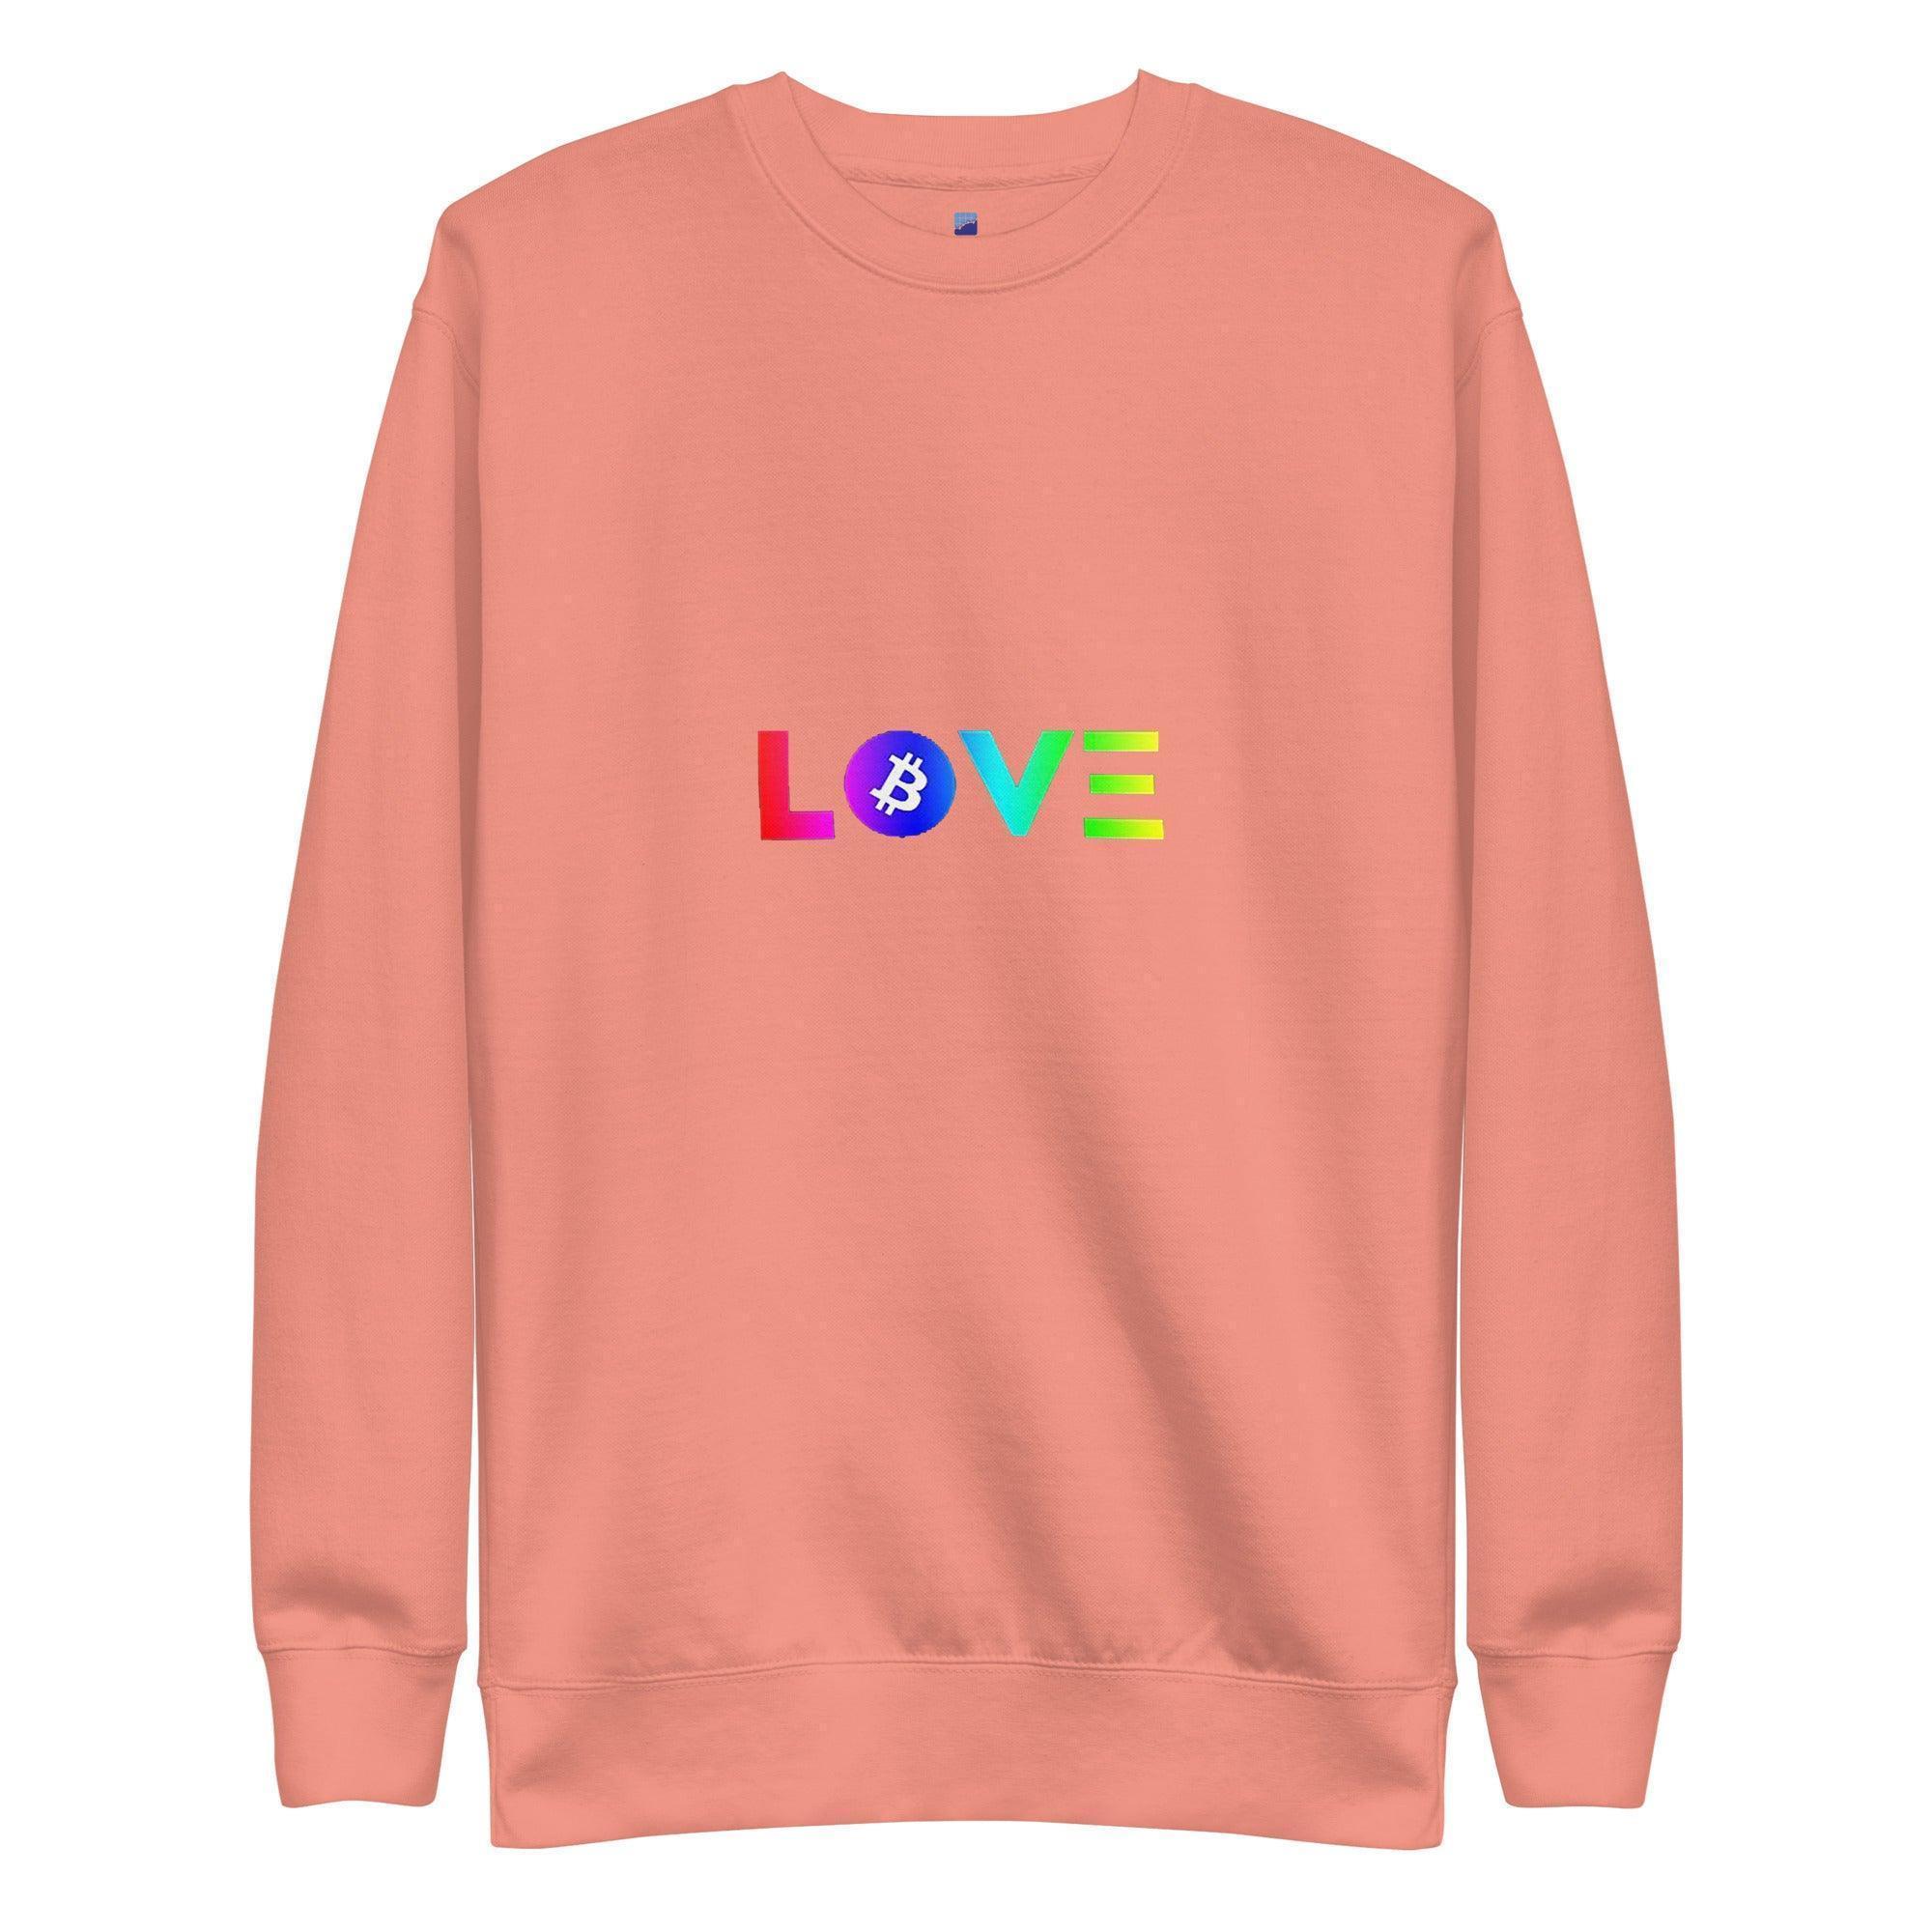 Bitcoin Love Sweatshirt - InvestmenTees